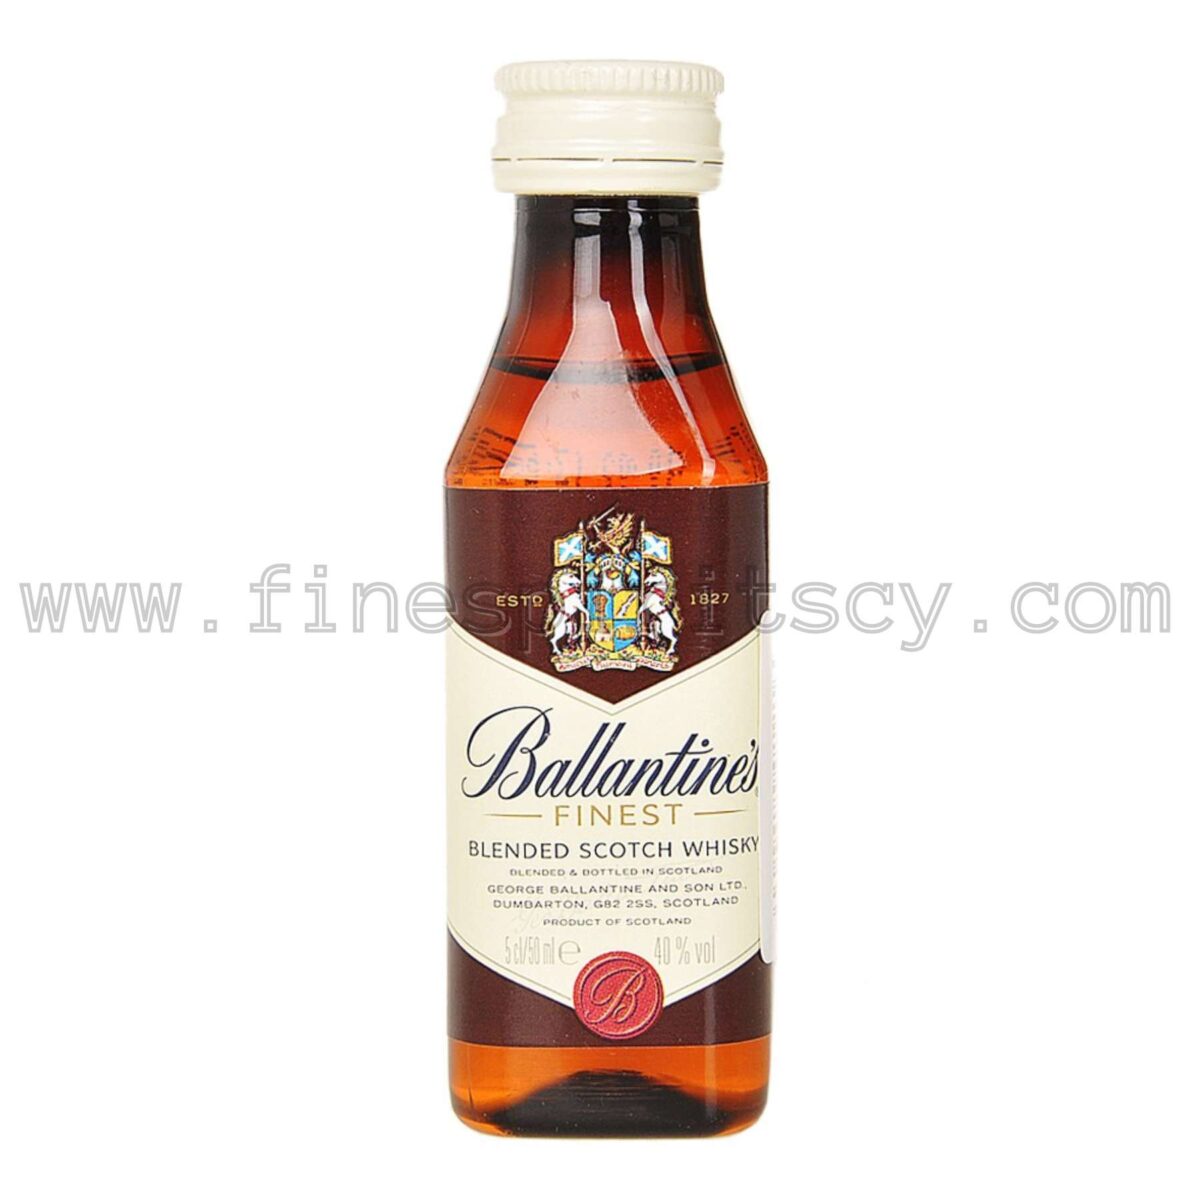 Ballantines Finest 50ml 5cl Cyprus Price Online Order FSCY Original Mini Miniature